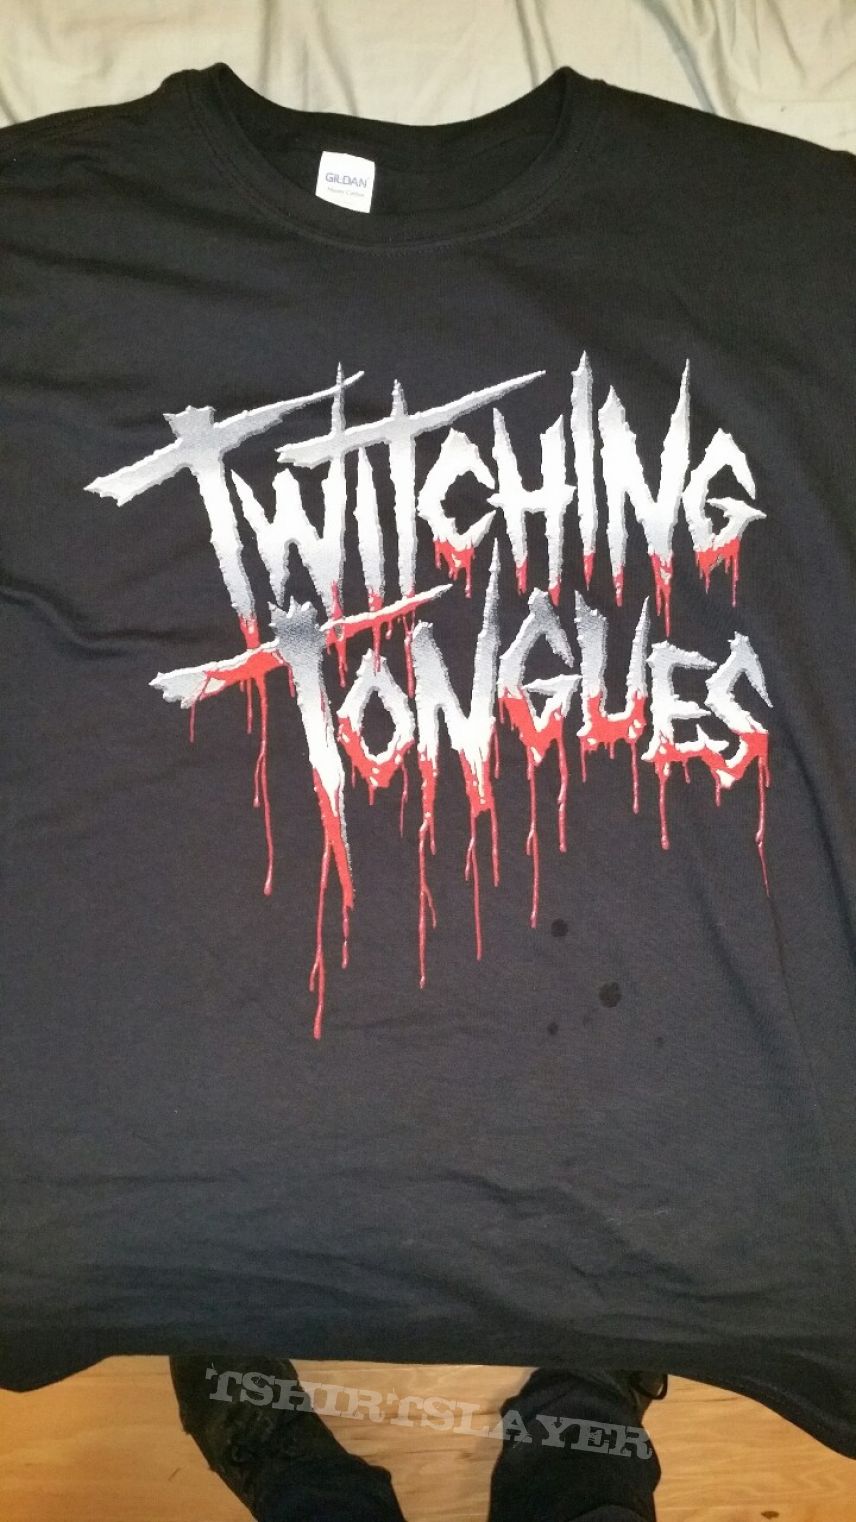 Twitching Tongues logo shirt 